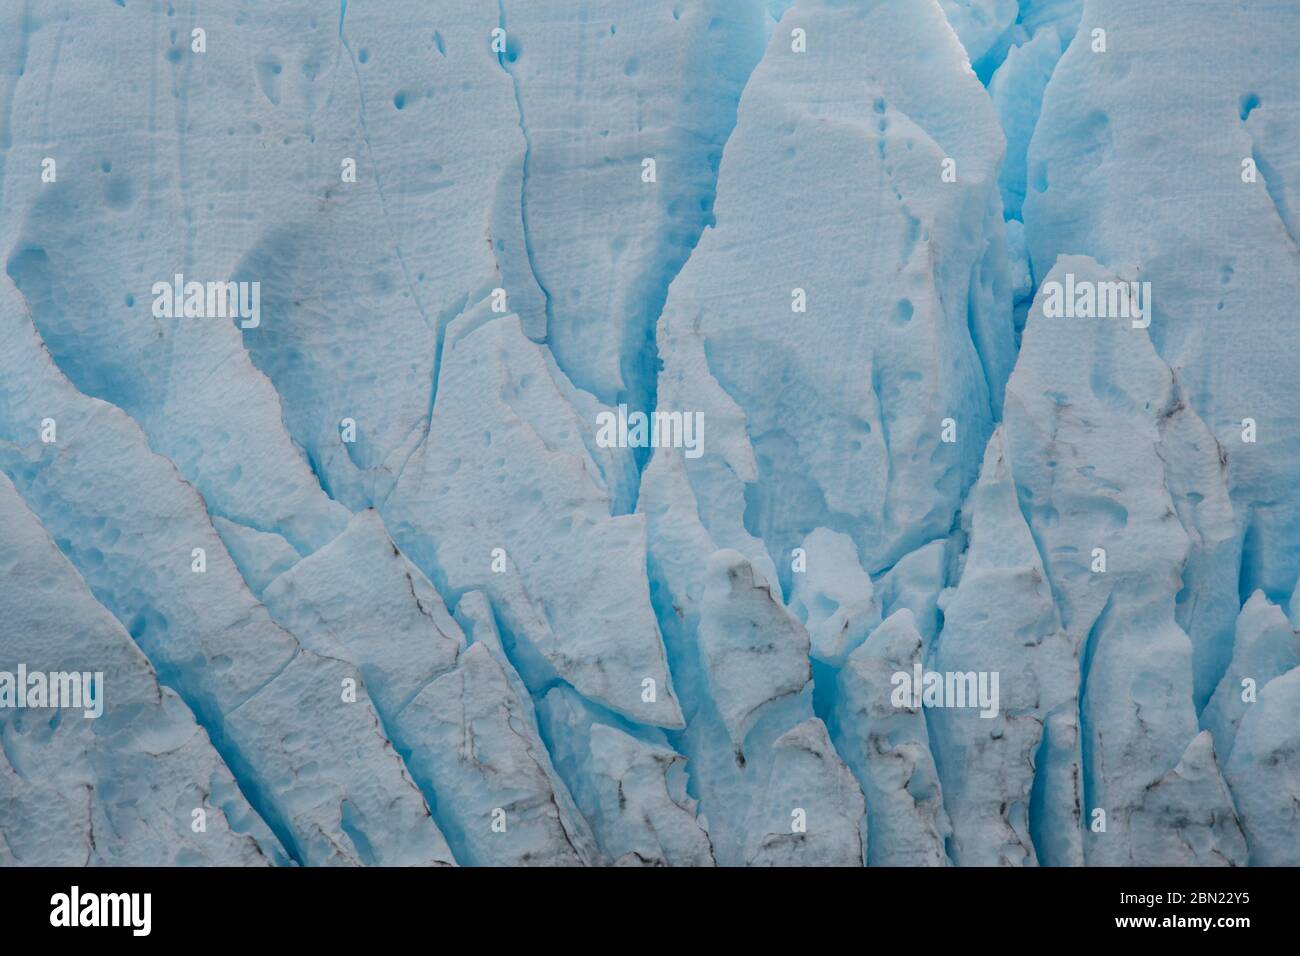 Perito Moreno glacier, El Calafate, Argentina Stock Photo